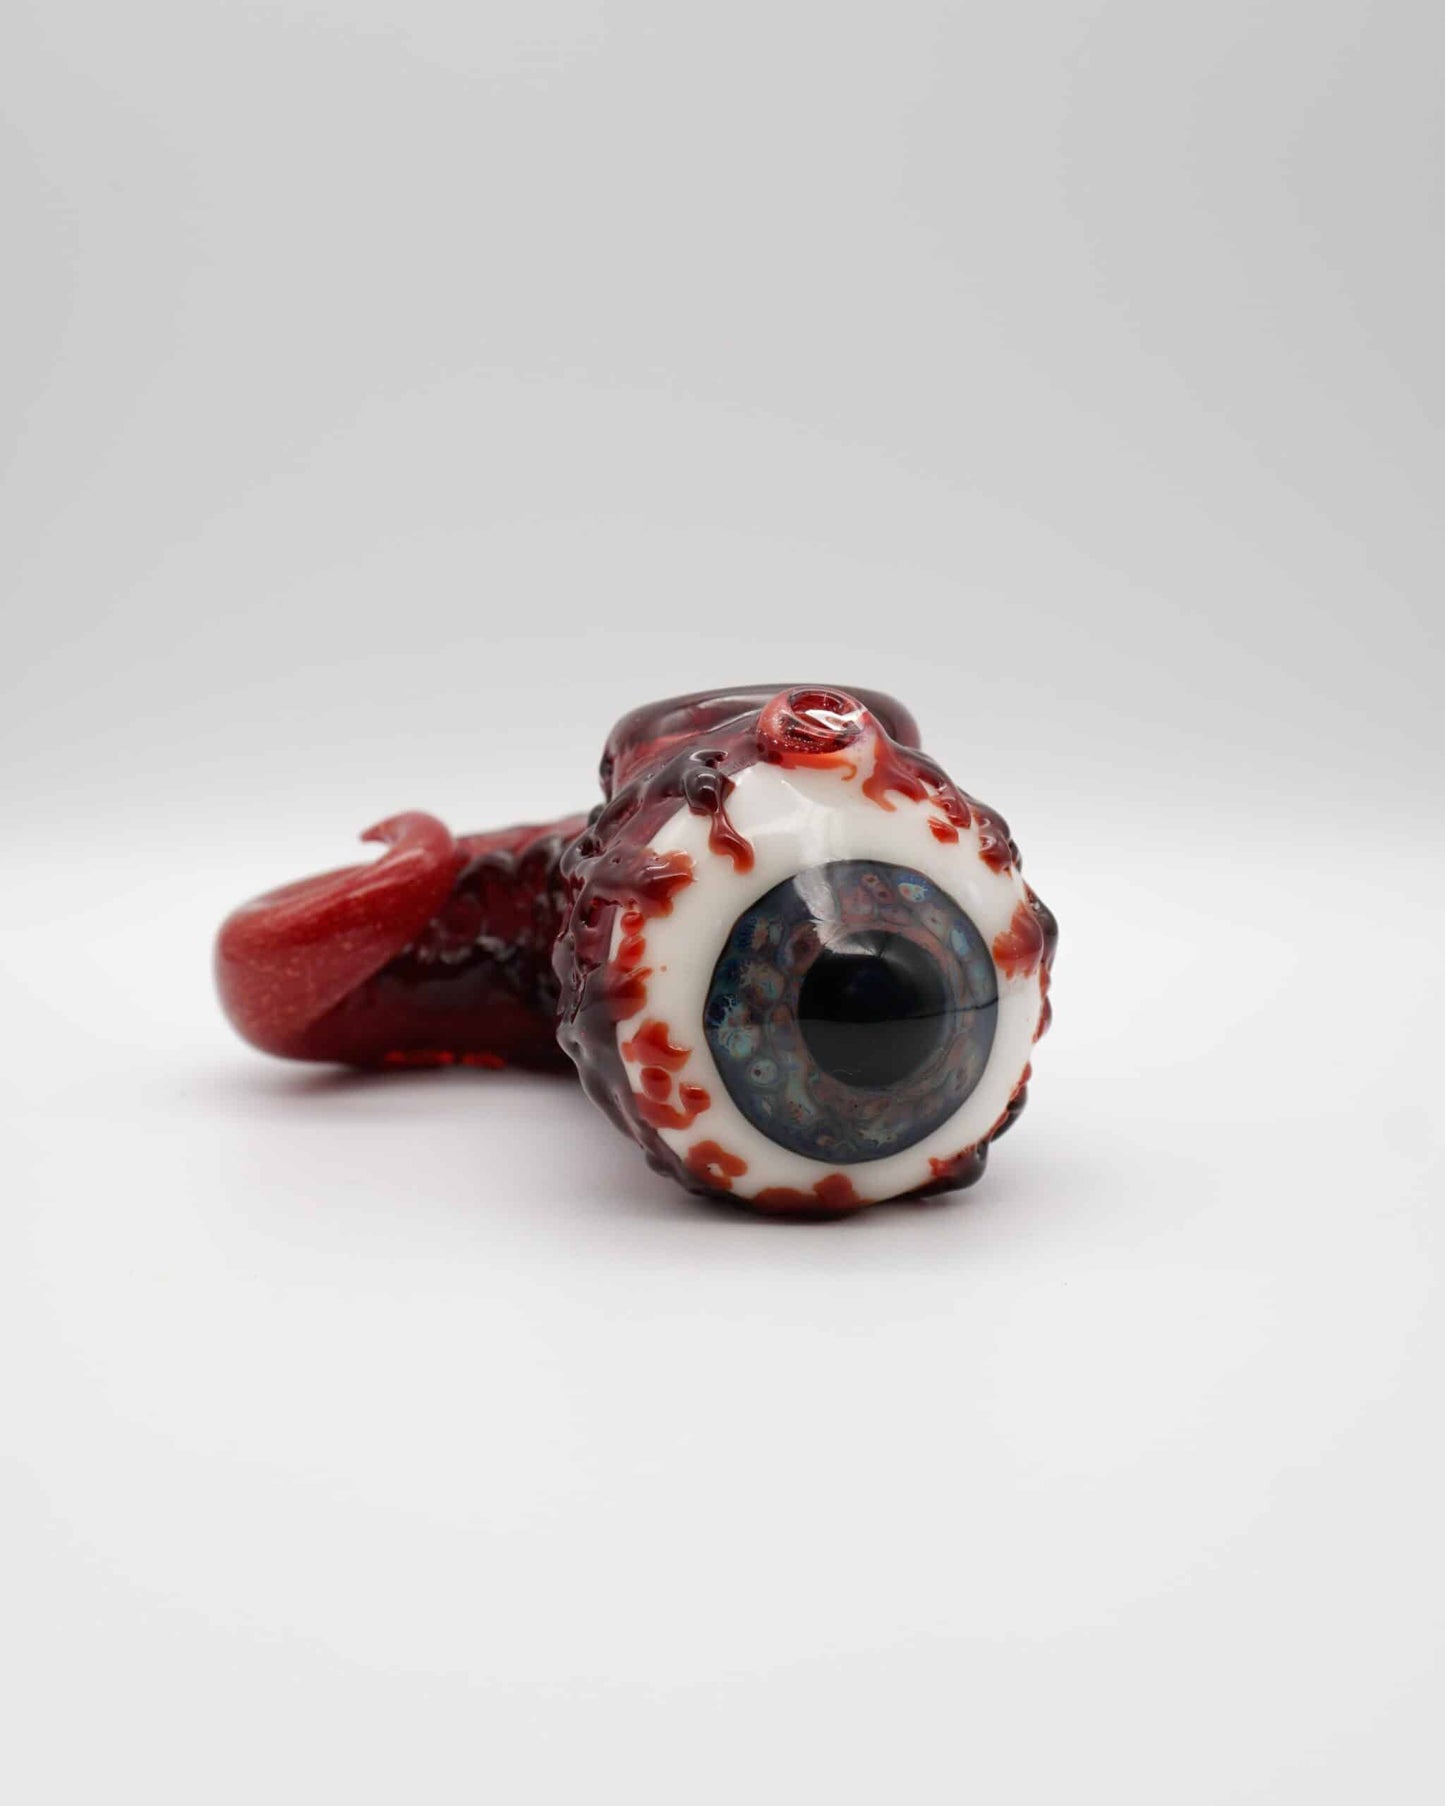 innovative design of the (M2) Red Eyeball Travel Rig by Merc